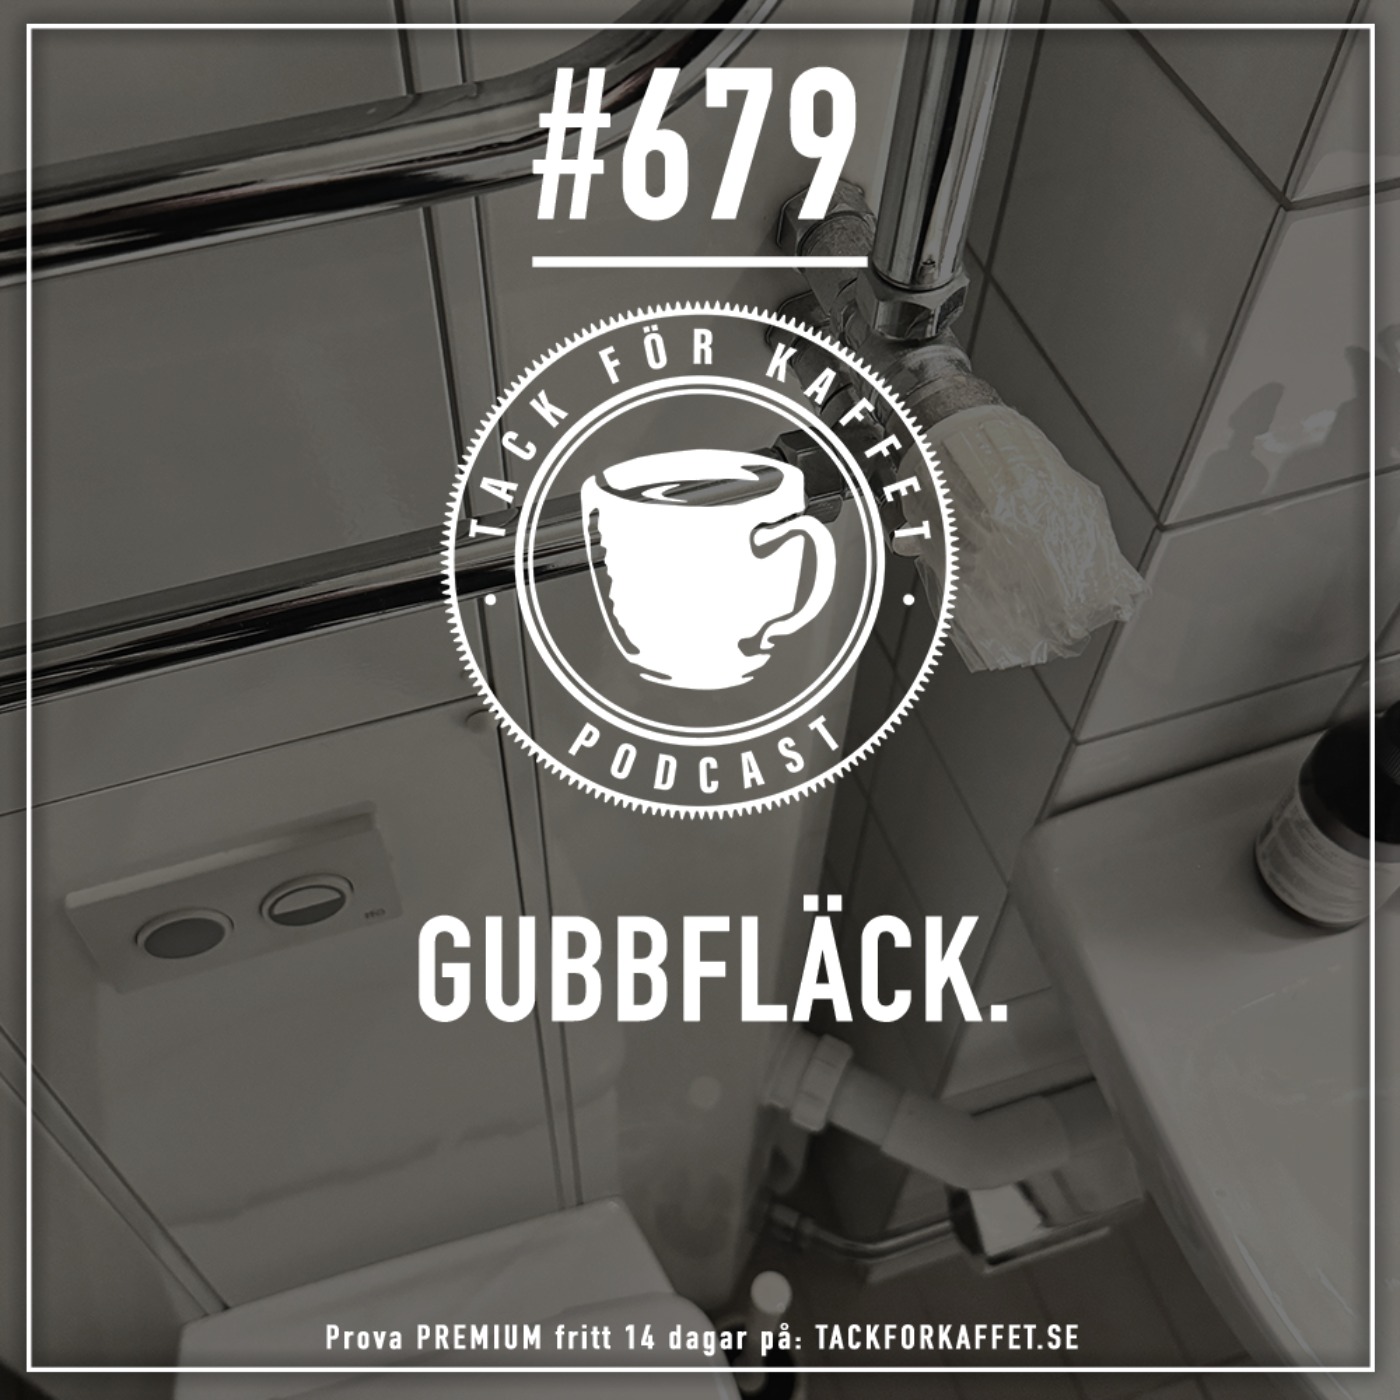 cover art for 679. Gubbfläck.